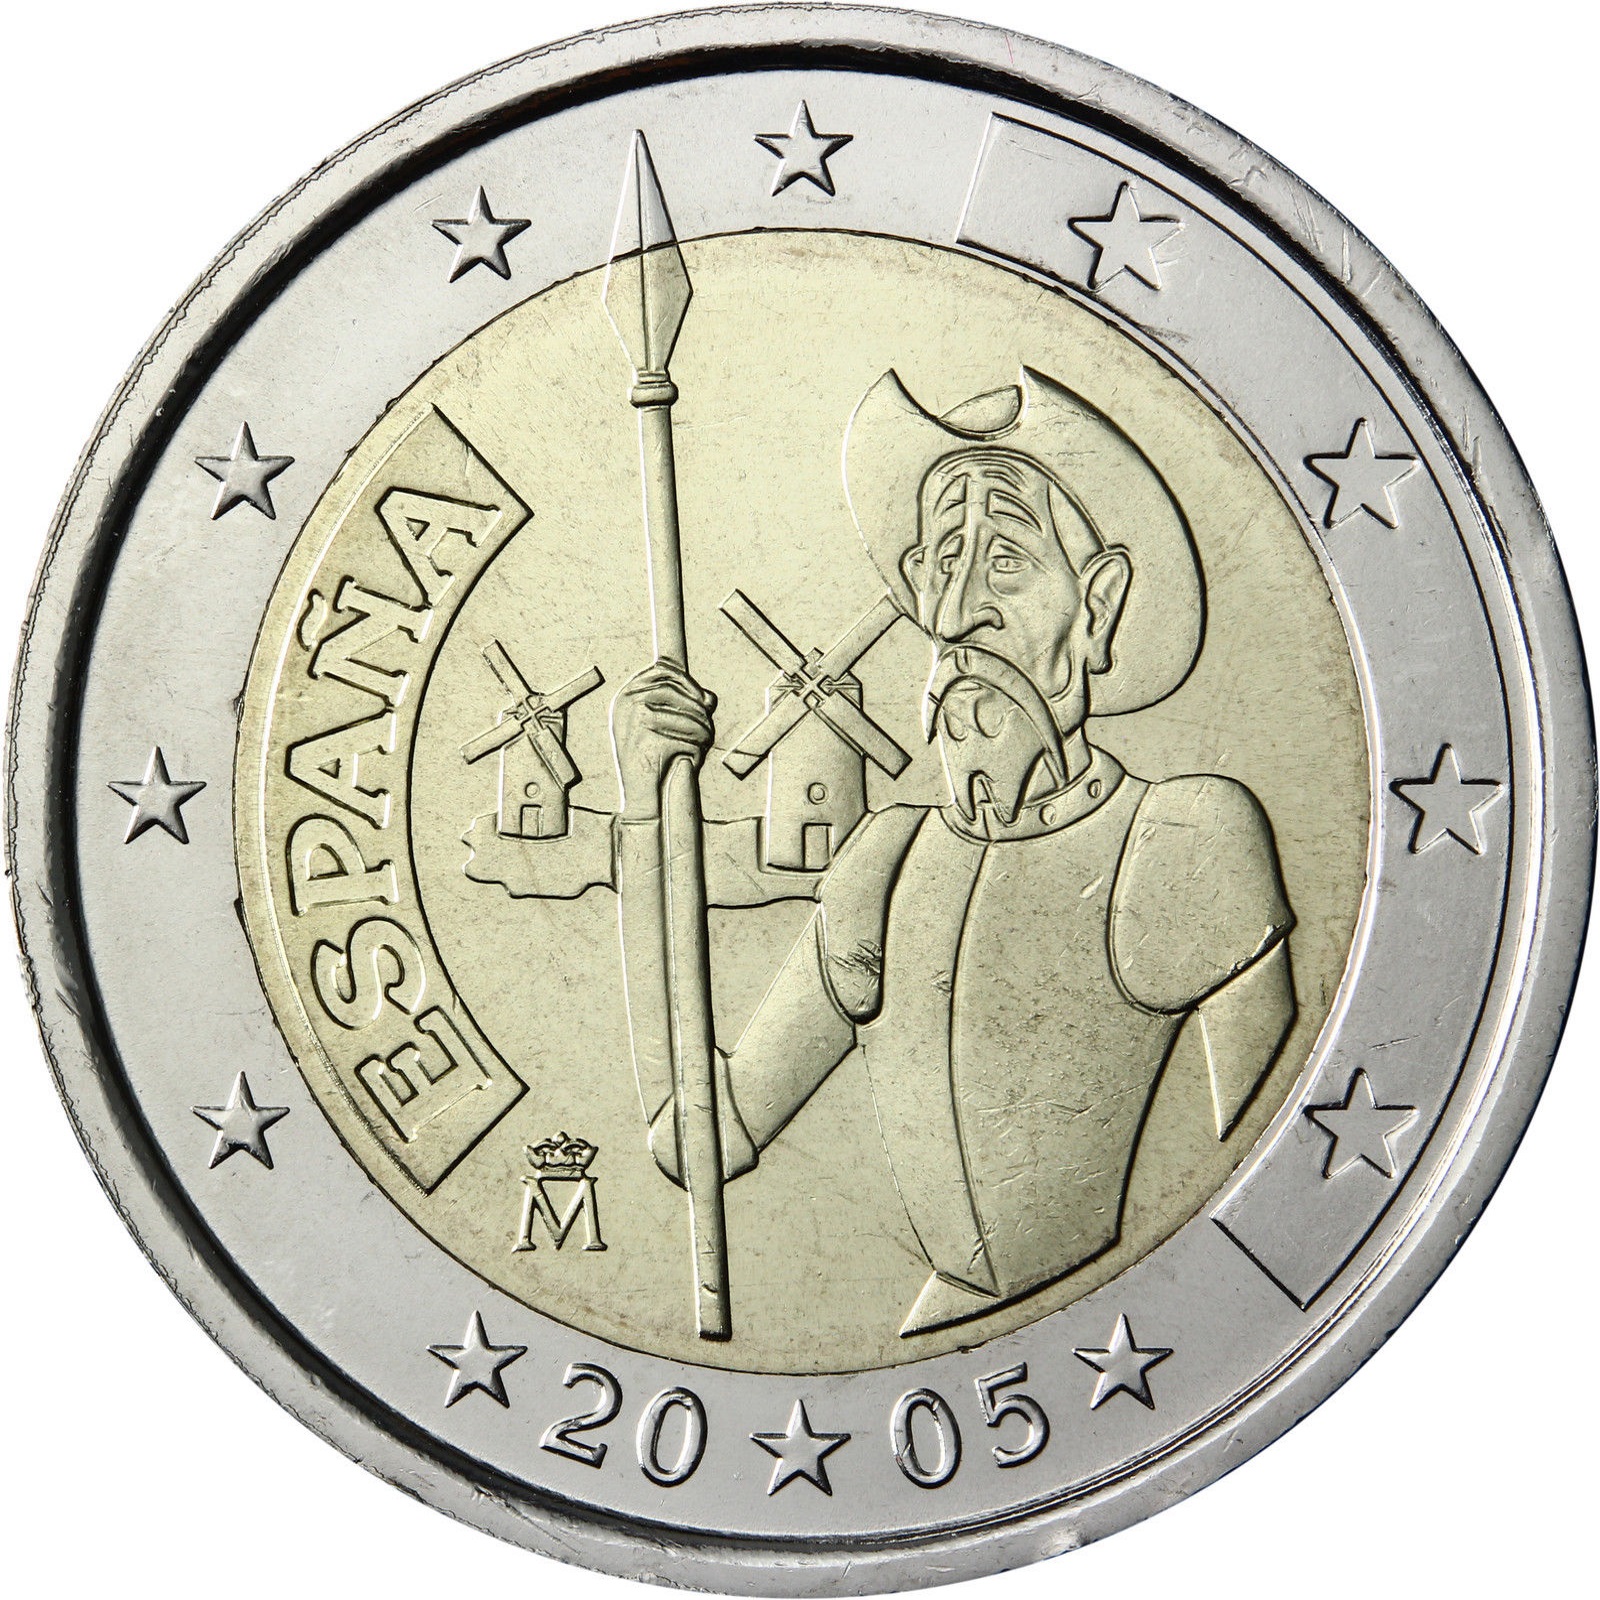 Spain 2 euro 2005 - Don Quixote of La Mancha [eur793]